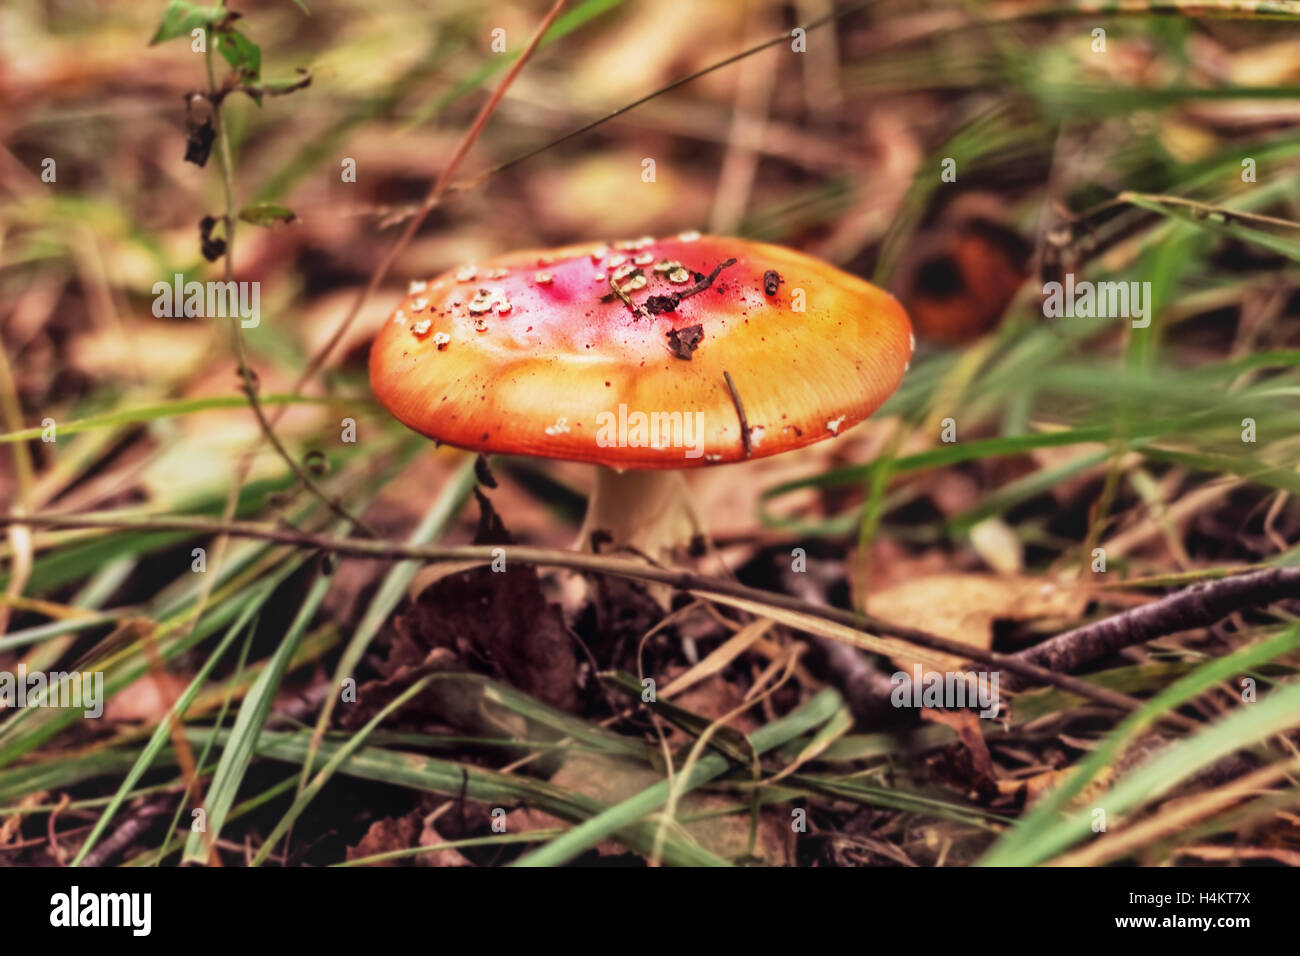 Pretty lurking in autumn woods little red poison mushroom Stock Photo